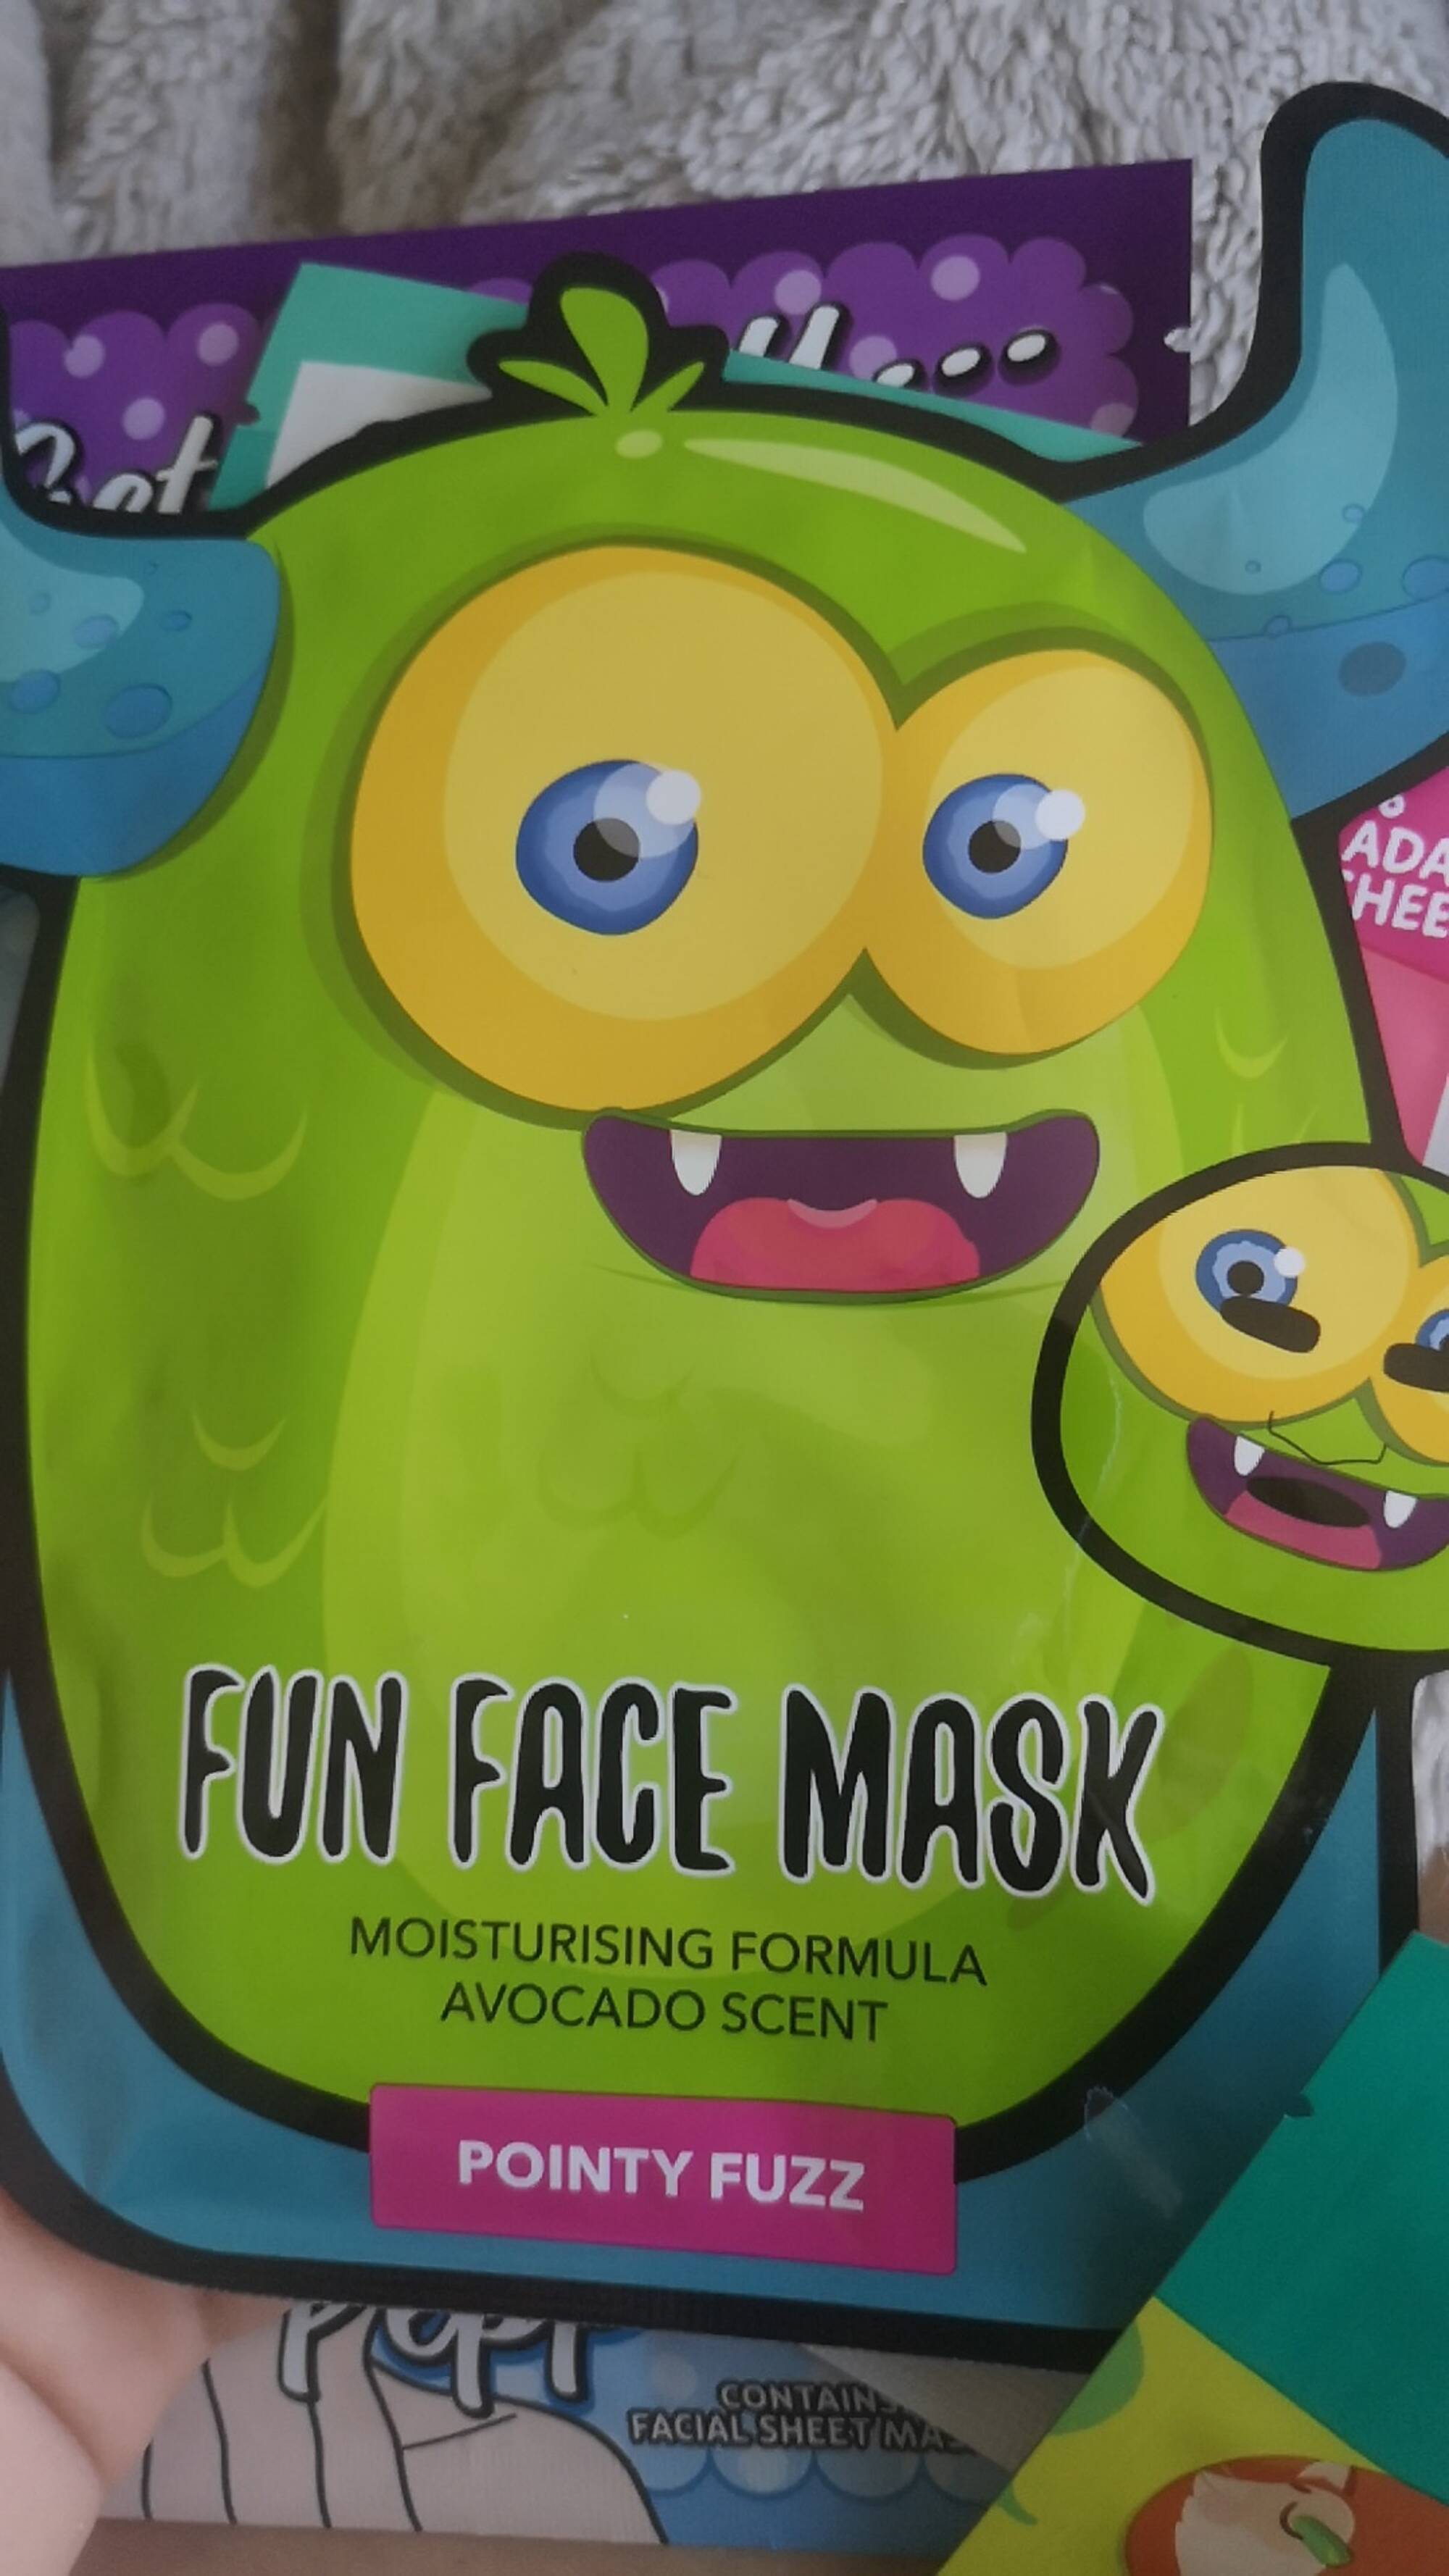 MAXBRANDS MARKETING B.V. - Pointy fuzz - Fun face mask